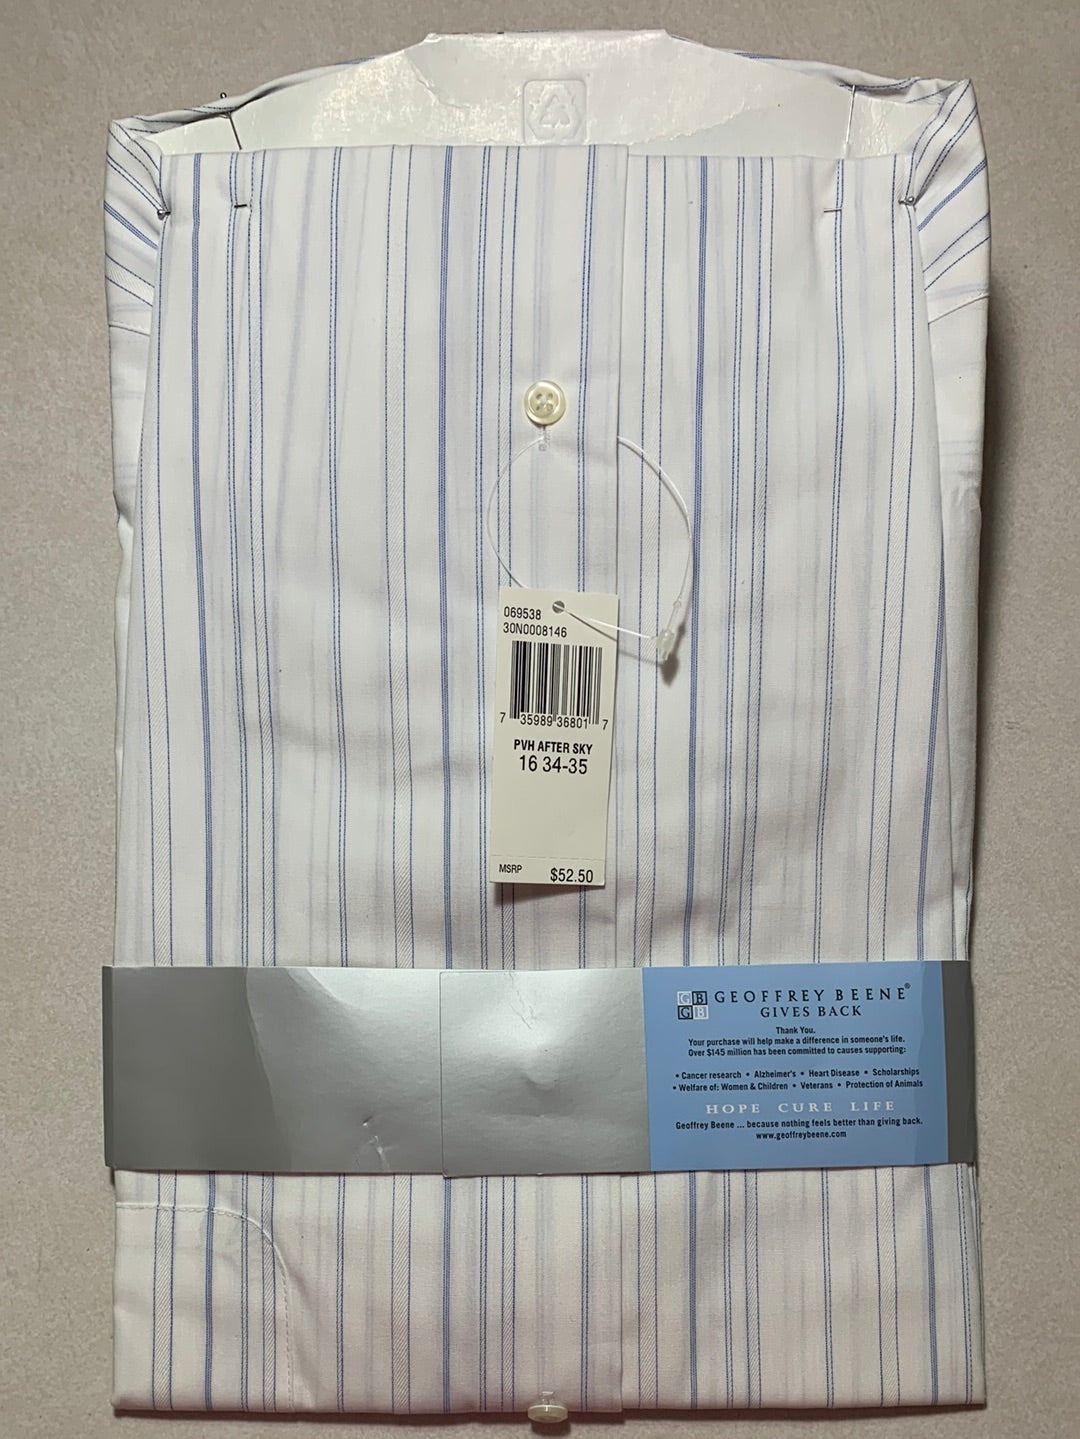 NEW - GEOFFREY BEENE white blue stripe Wrinkle Free Regular Fit Shirt - 16 34-35 Large